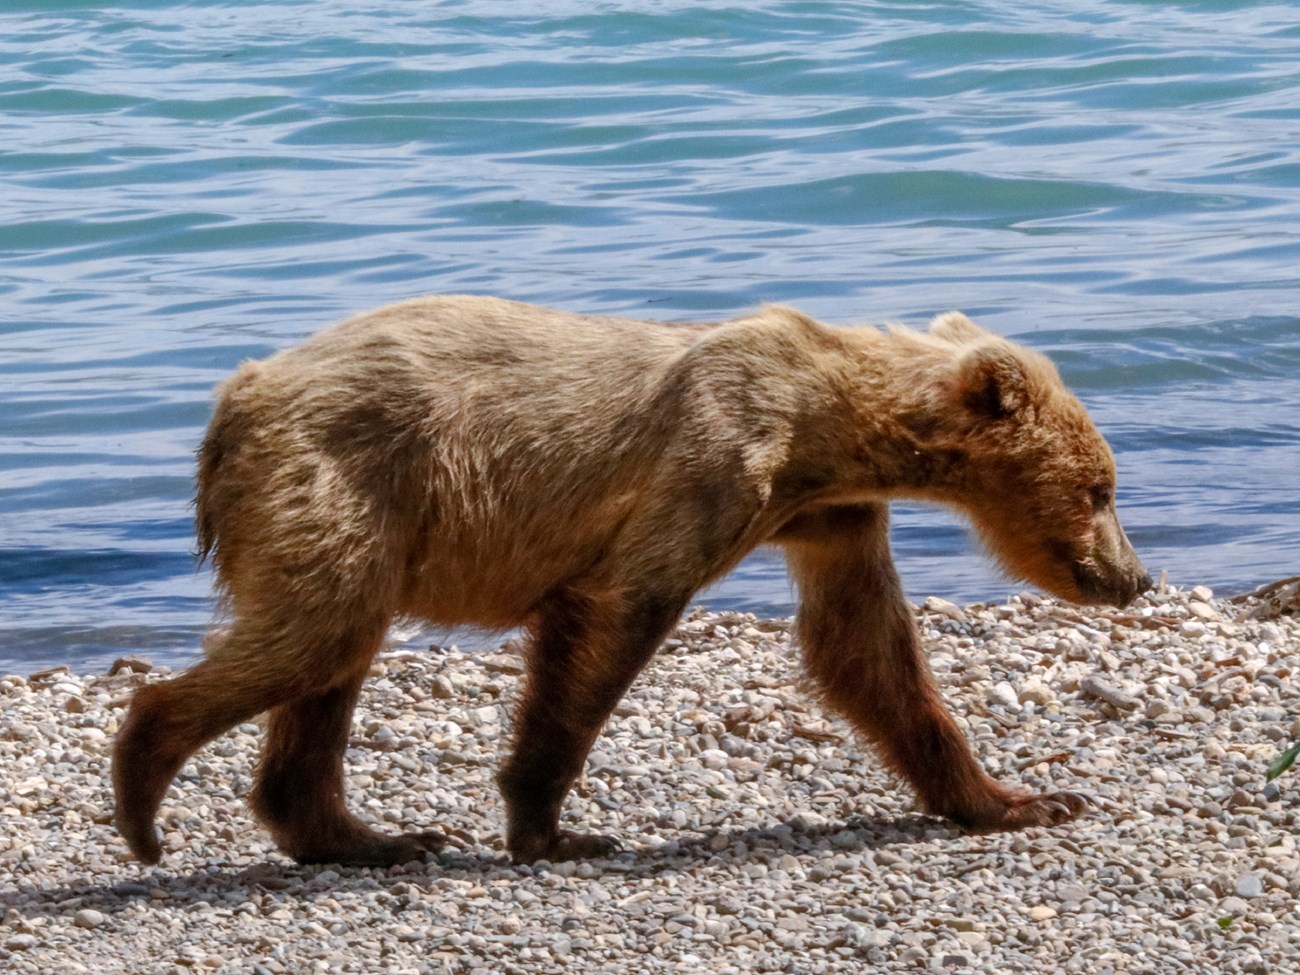 910's yearling cub walks across a beach in early summer.